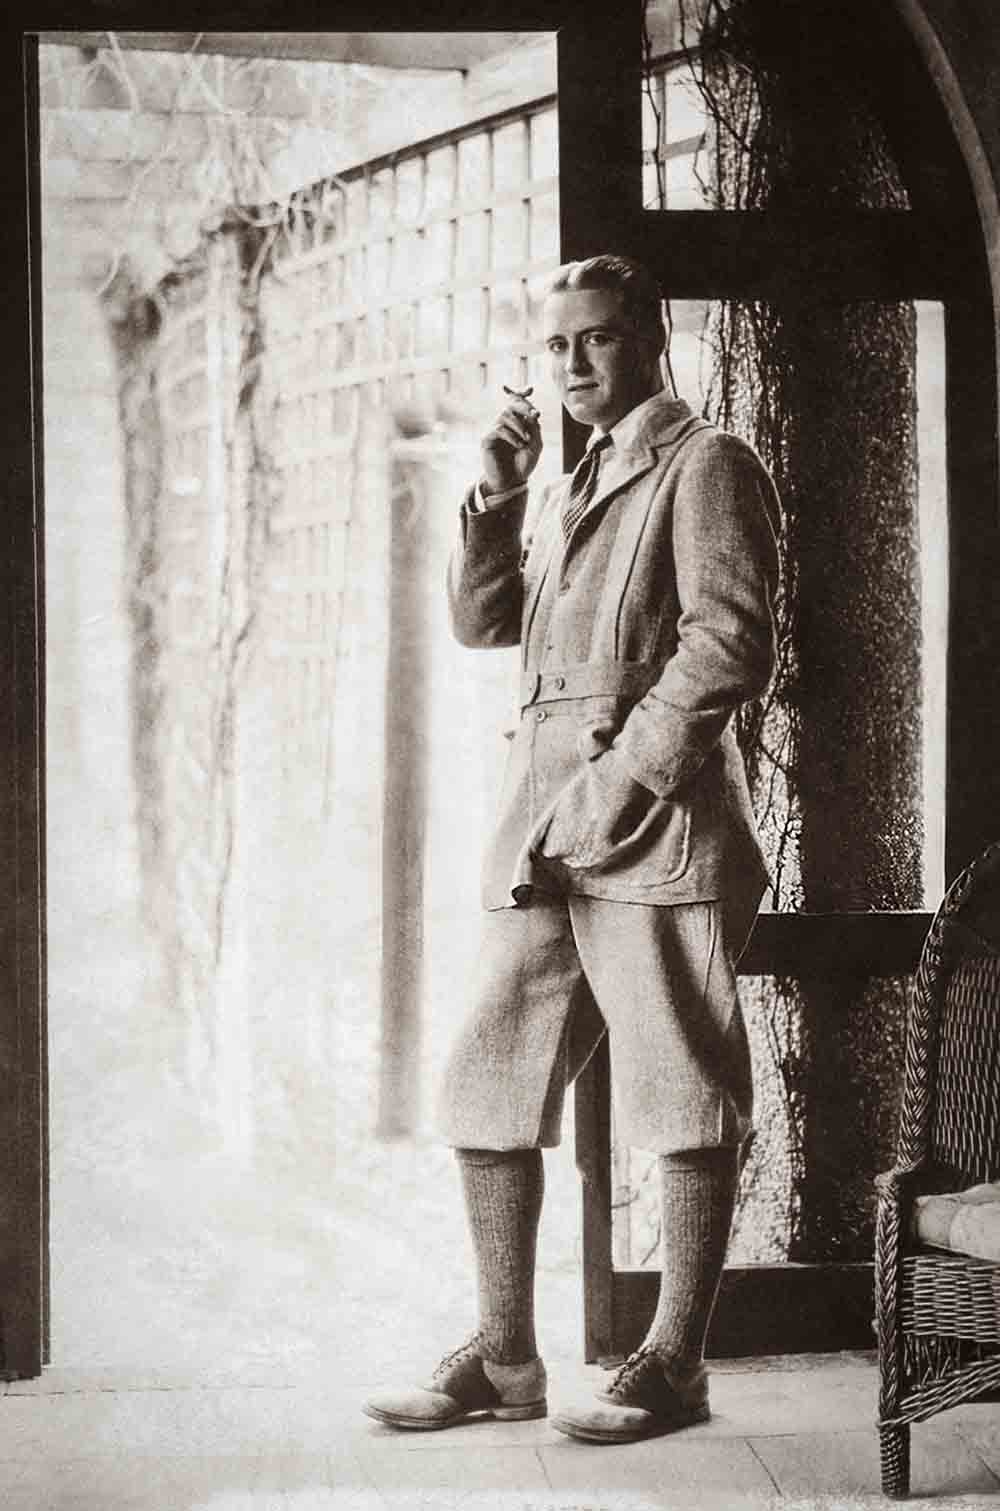 F Scott Fitzgerald photograph 1923